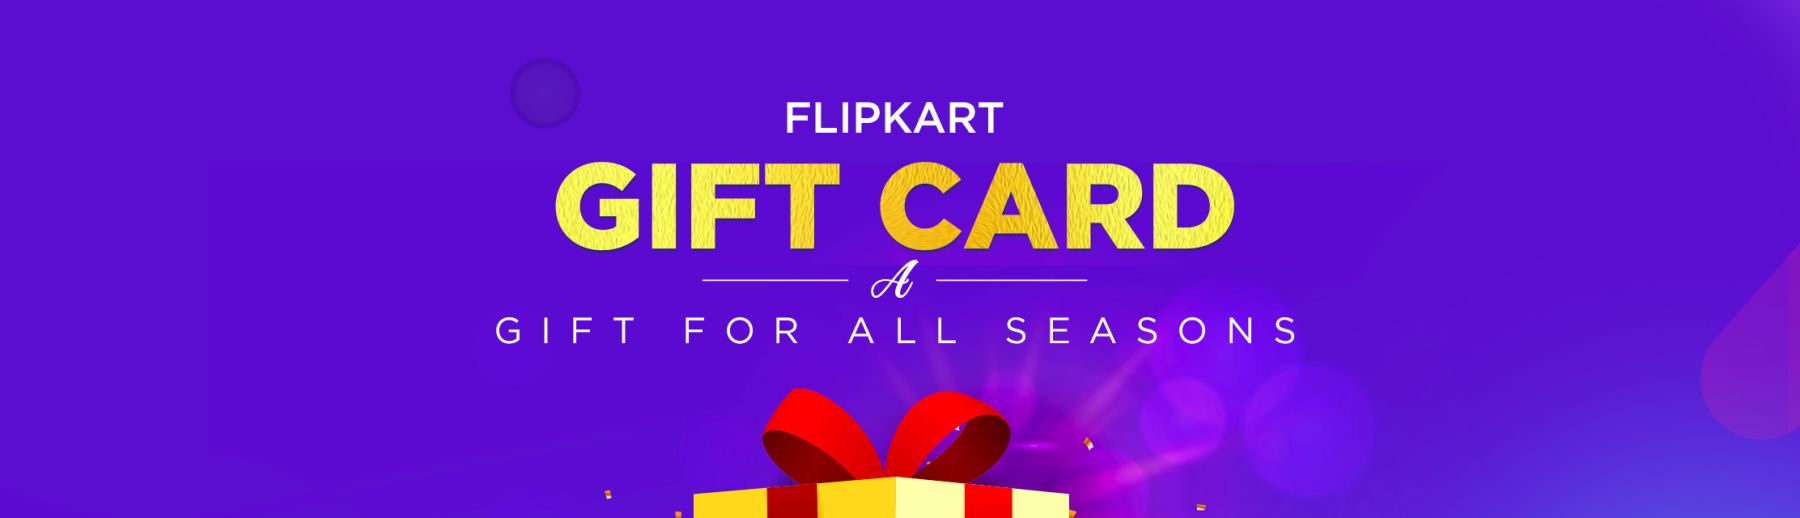 Flipkart Gift Cards Buy Gift Cards Gift Vouchers Online Great Offers Top Brands Flipkart Com